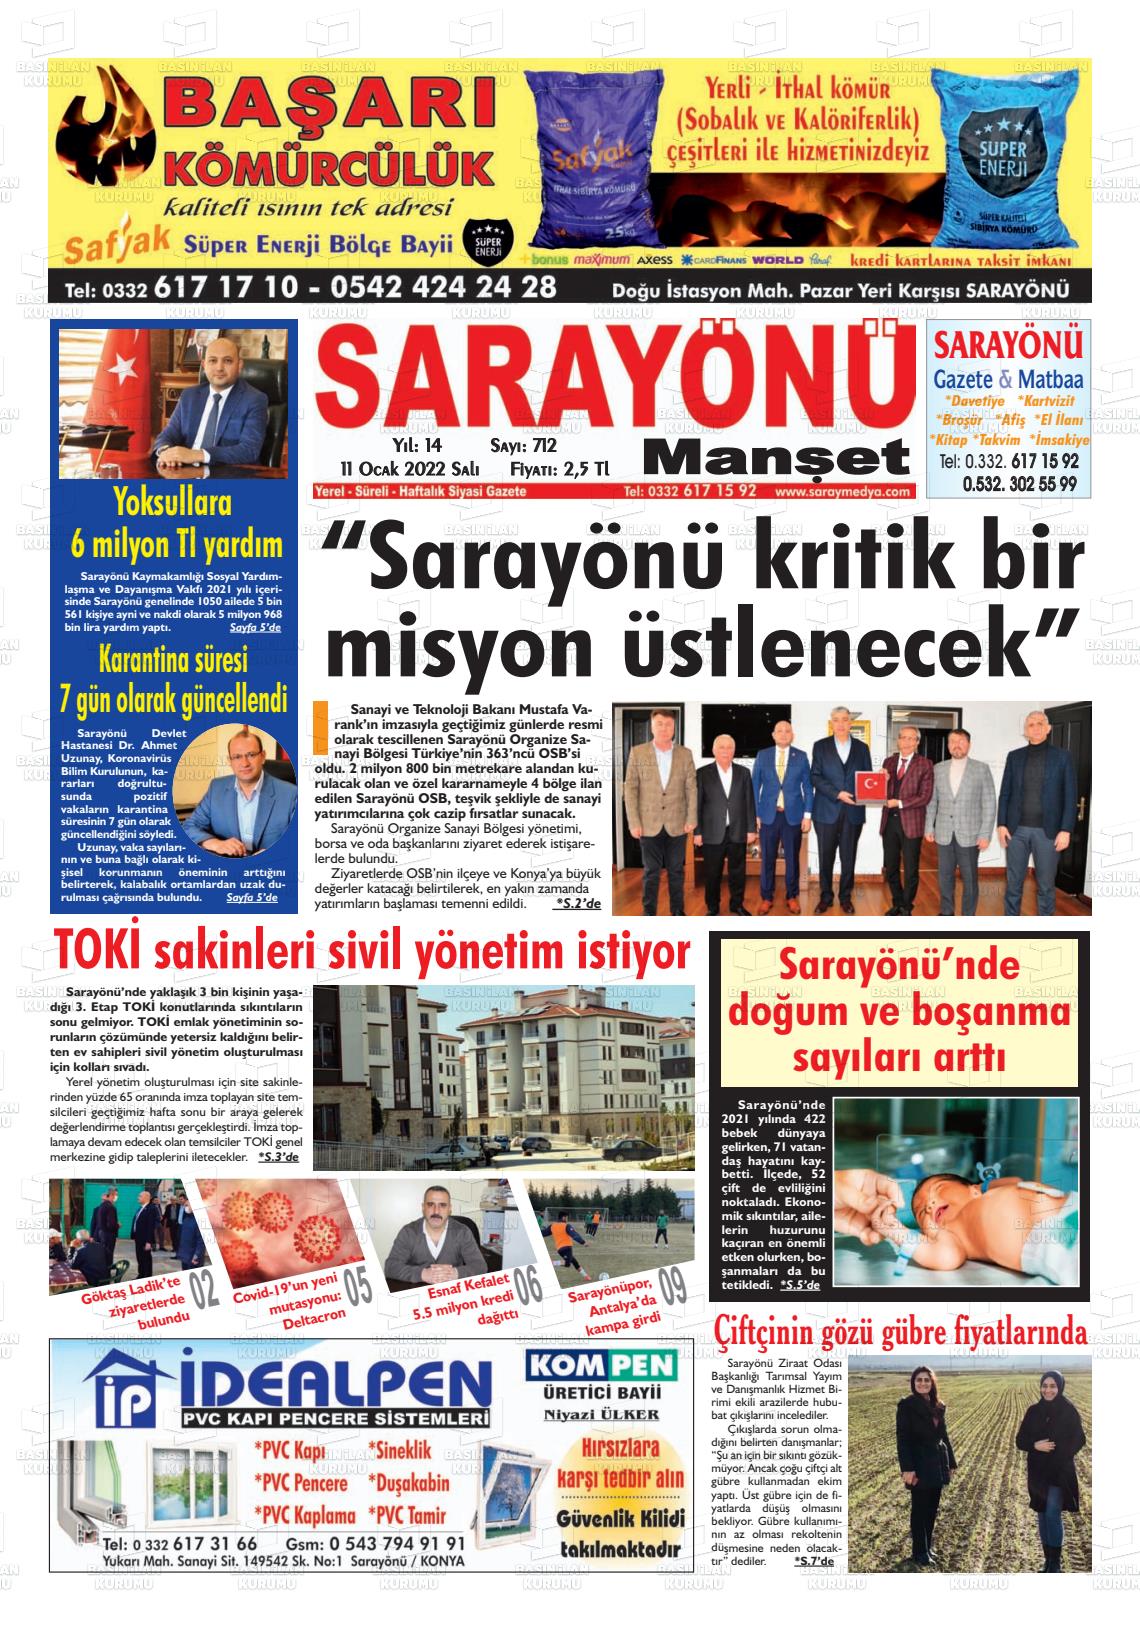 11 Ocak 2022 Saray Medya Gazete Manşeti